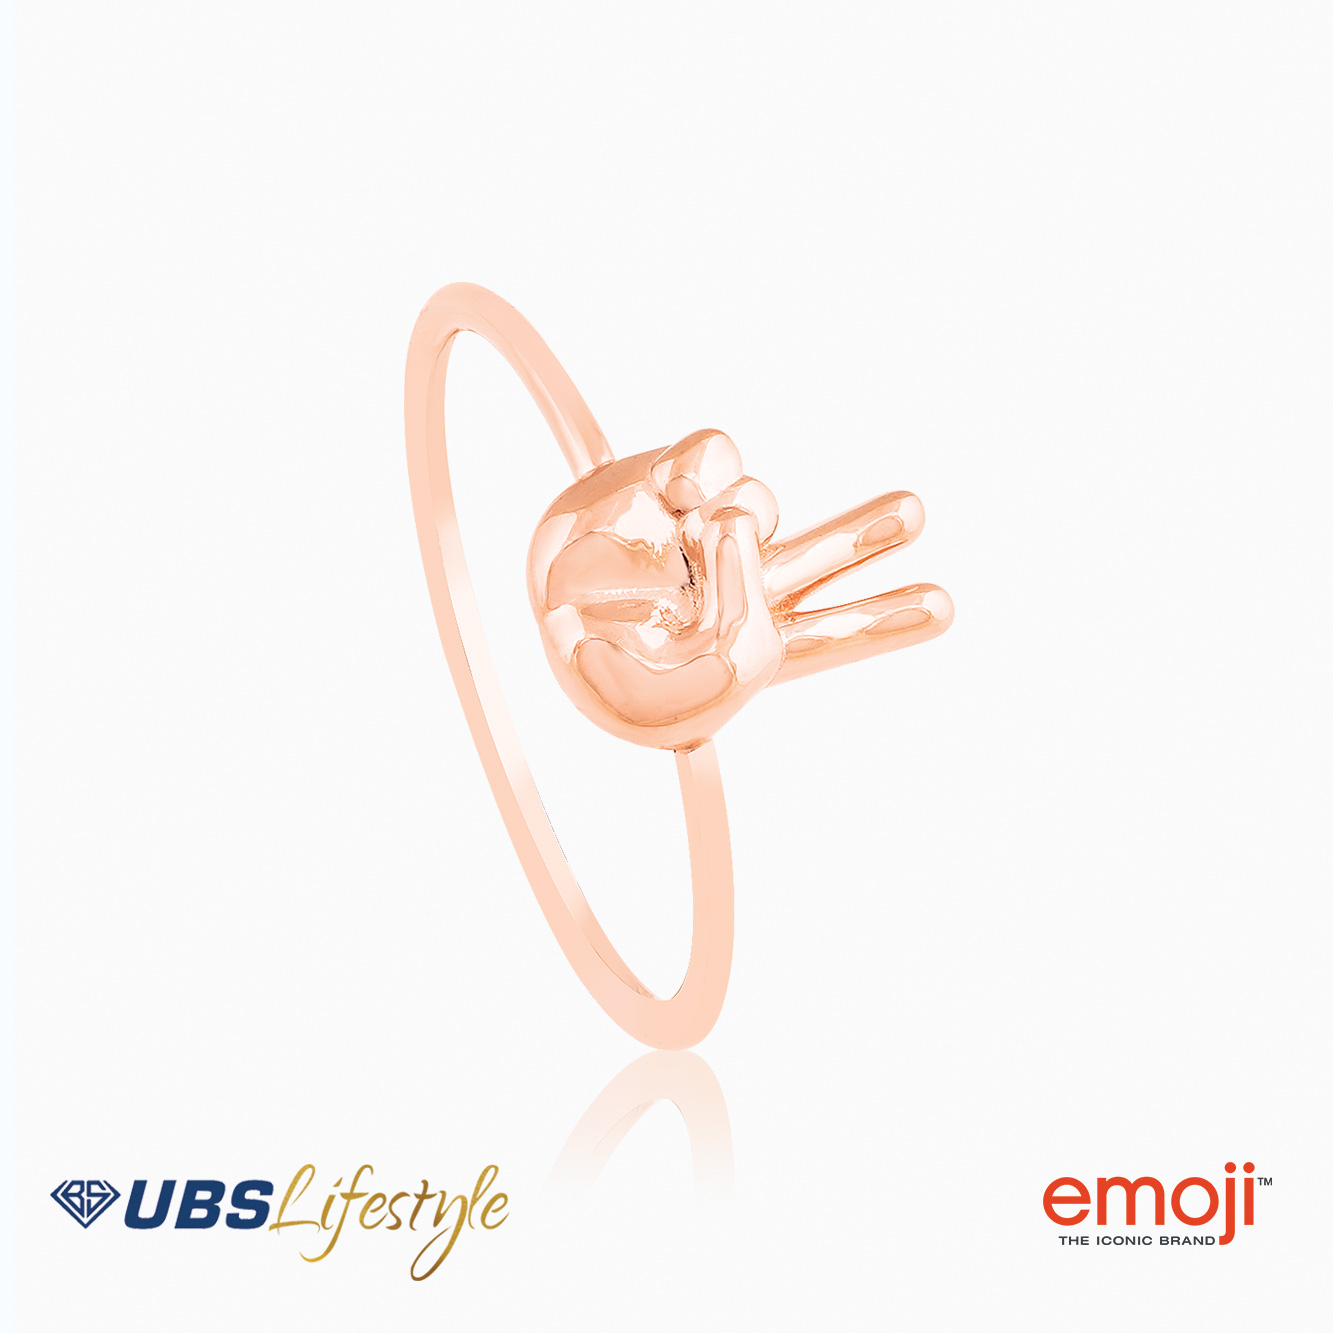 UBS Cincin Emas Emoji - Ccq0001- 17K